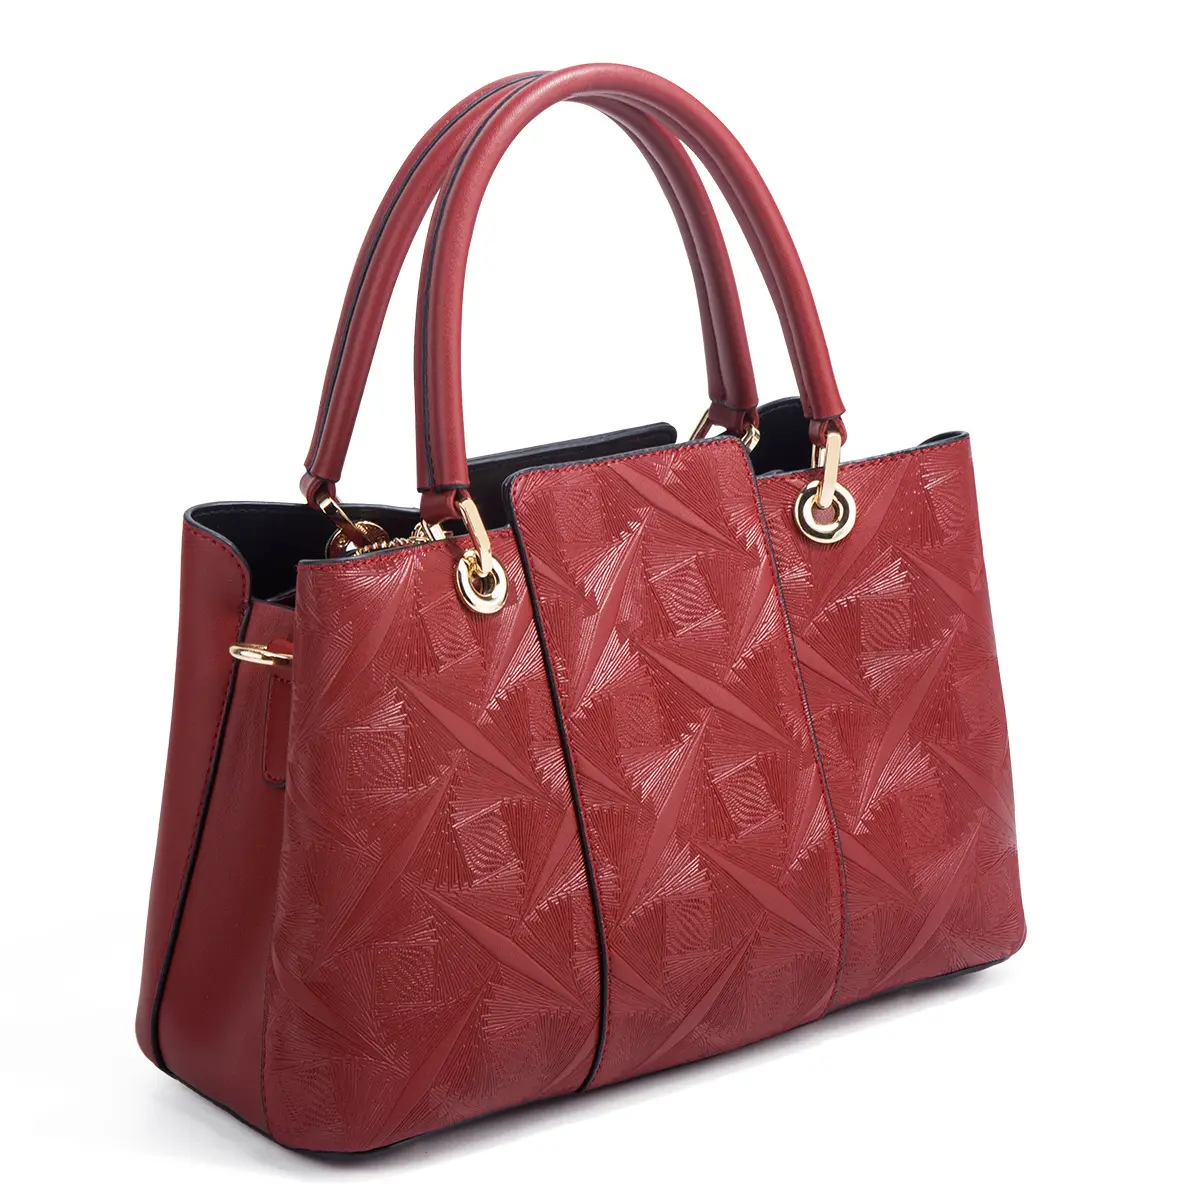 Classic designer women's handbag large capacity PU leather bag casual handbag crossbody shopping bag fashion style